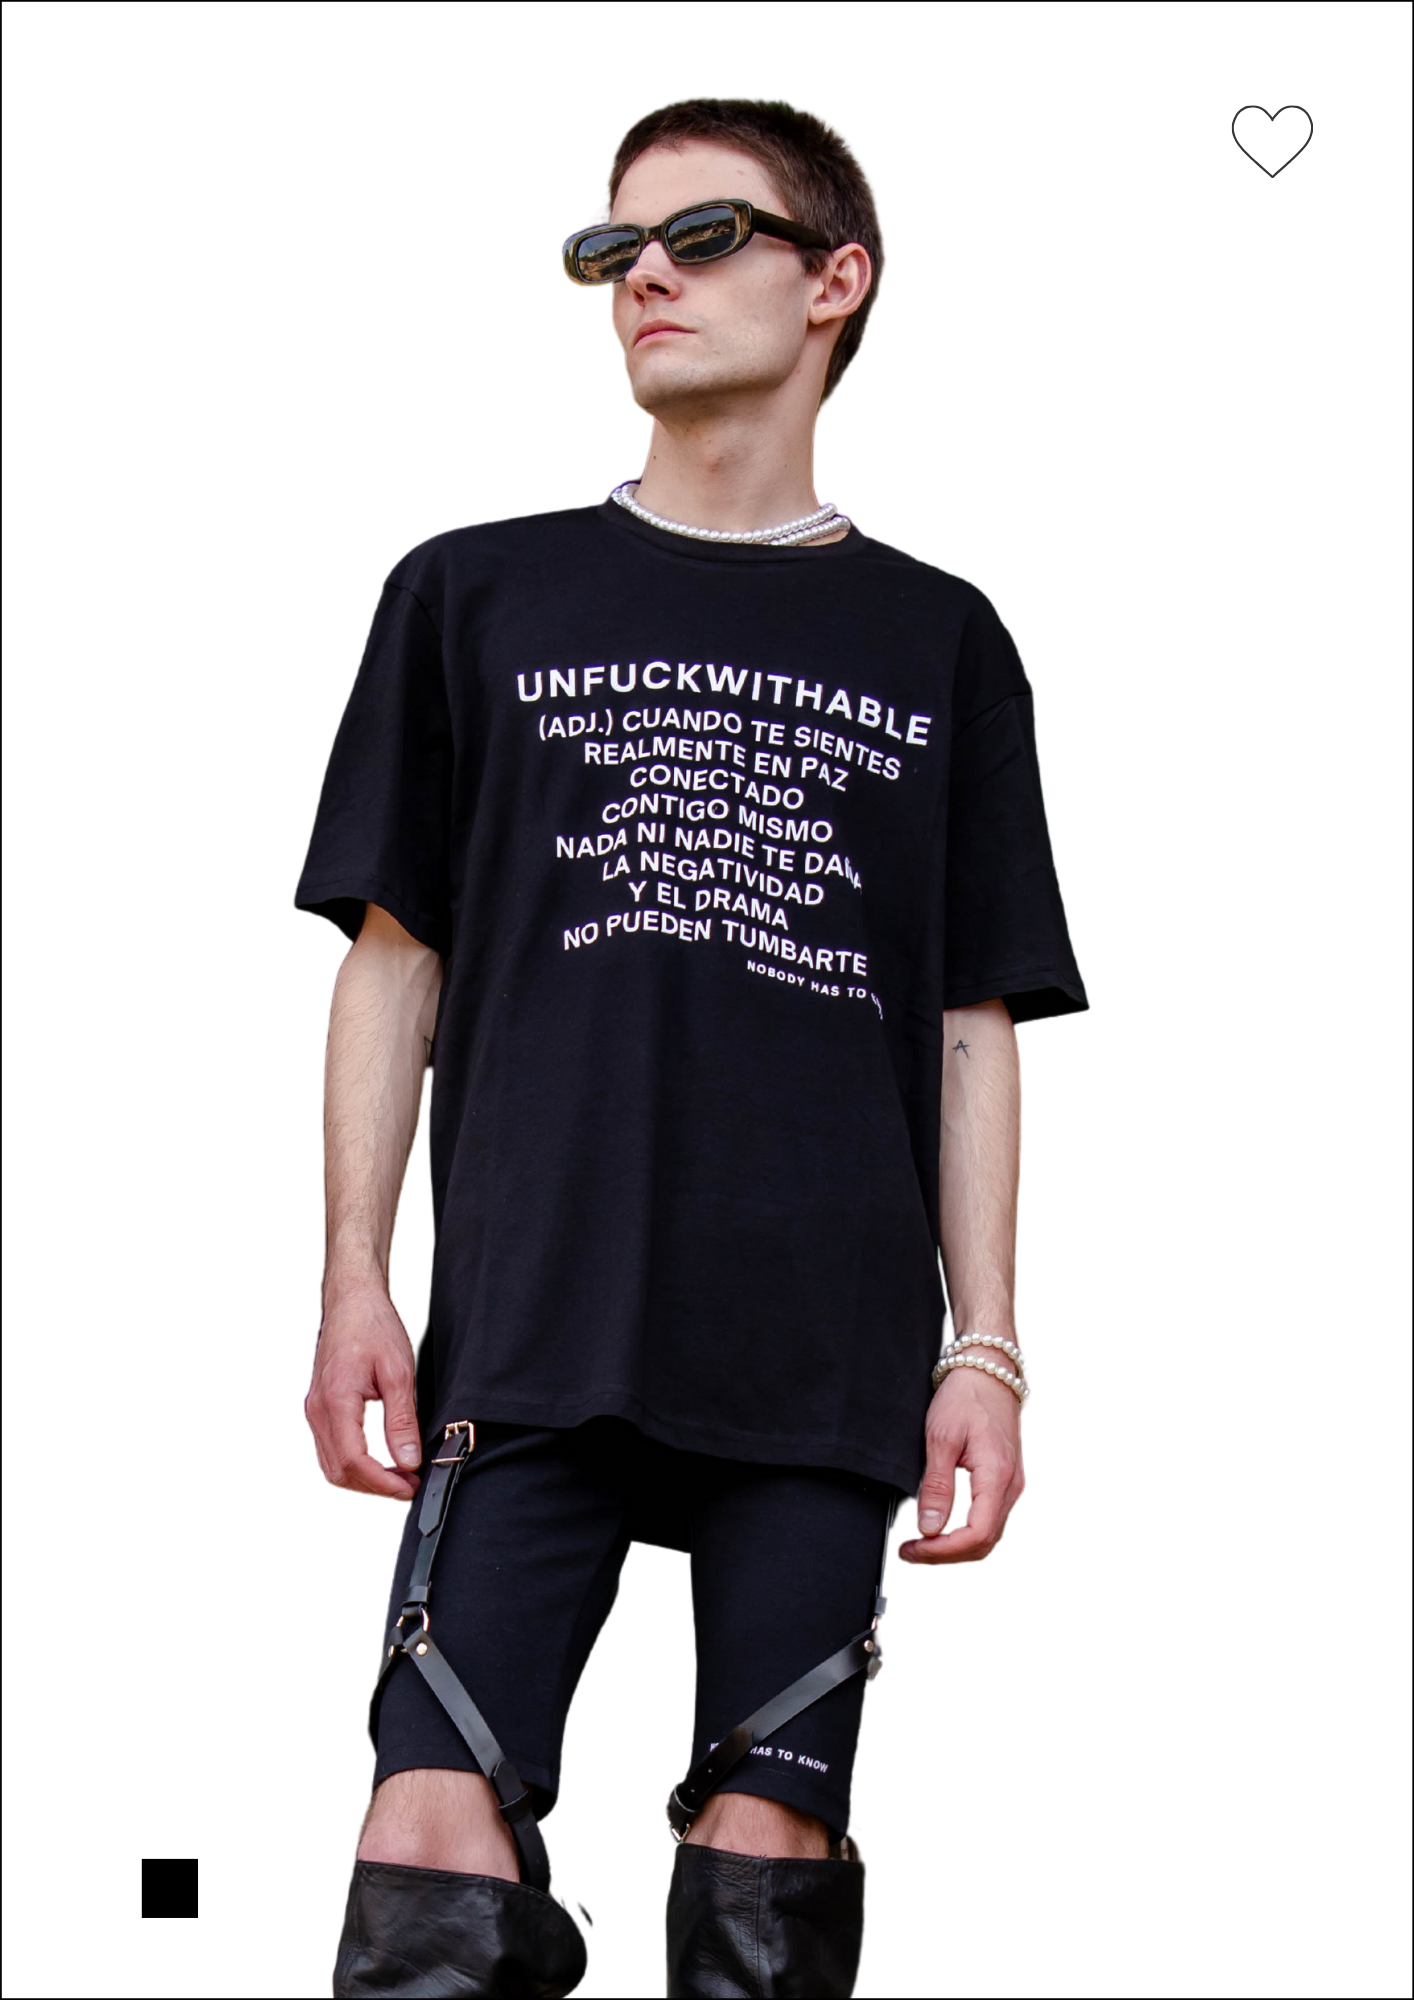 Unfuckwithable (S) t-shirt